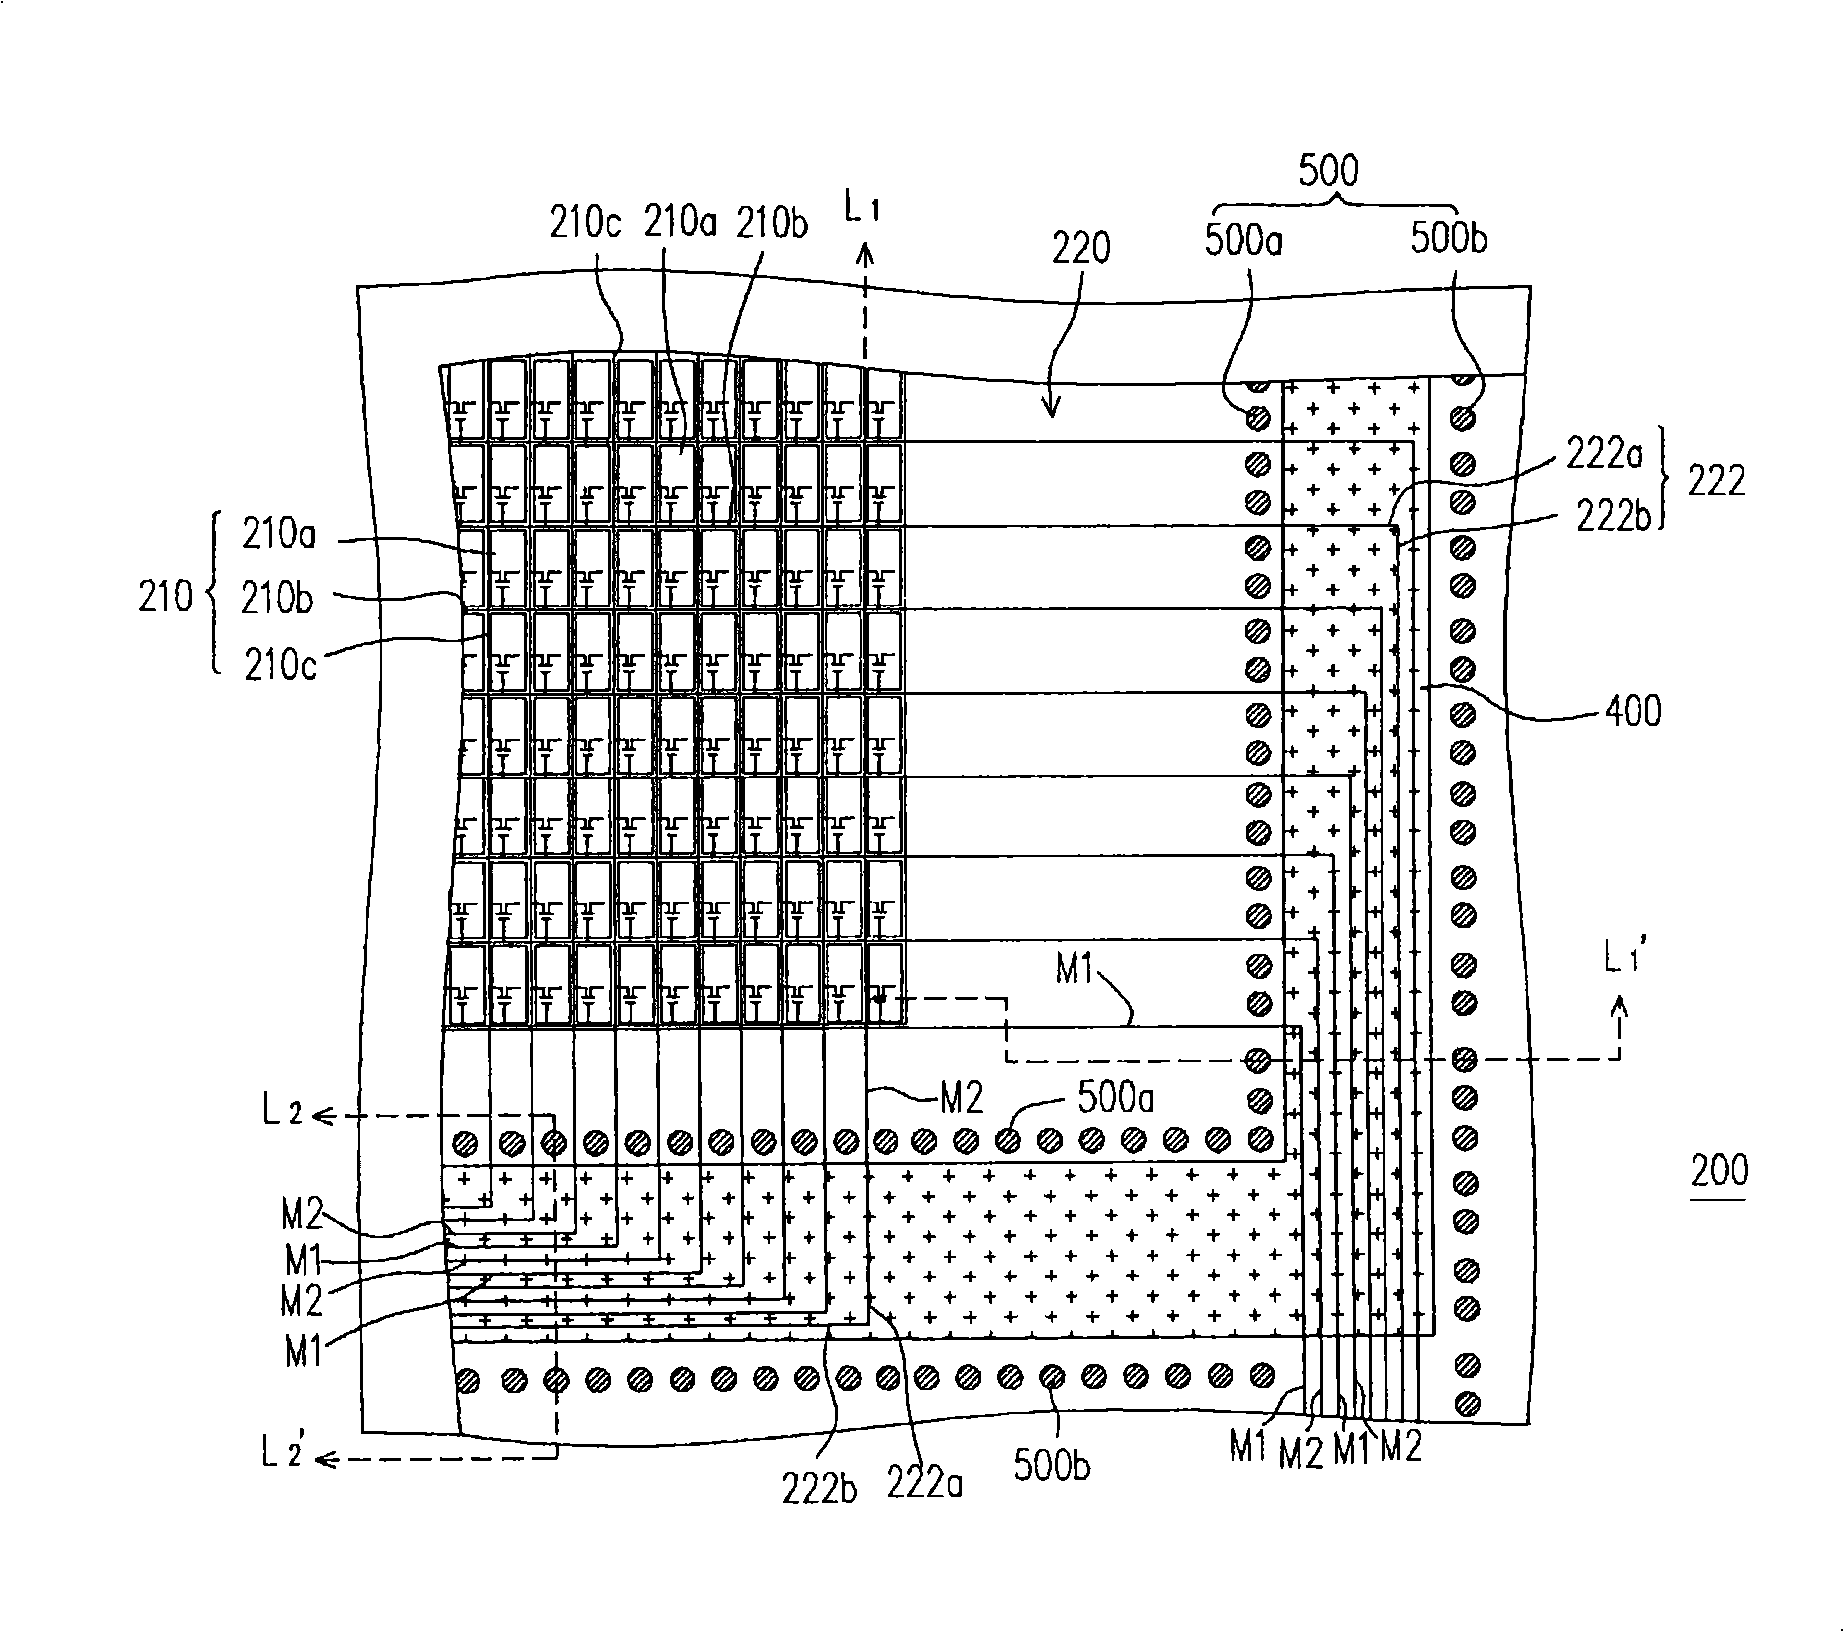 Display panel and optoelectronic device